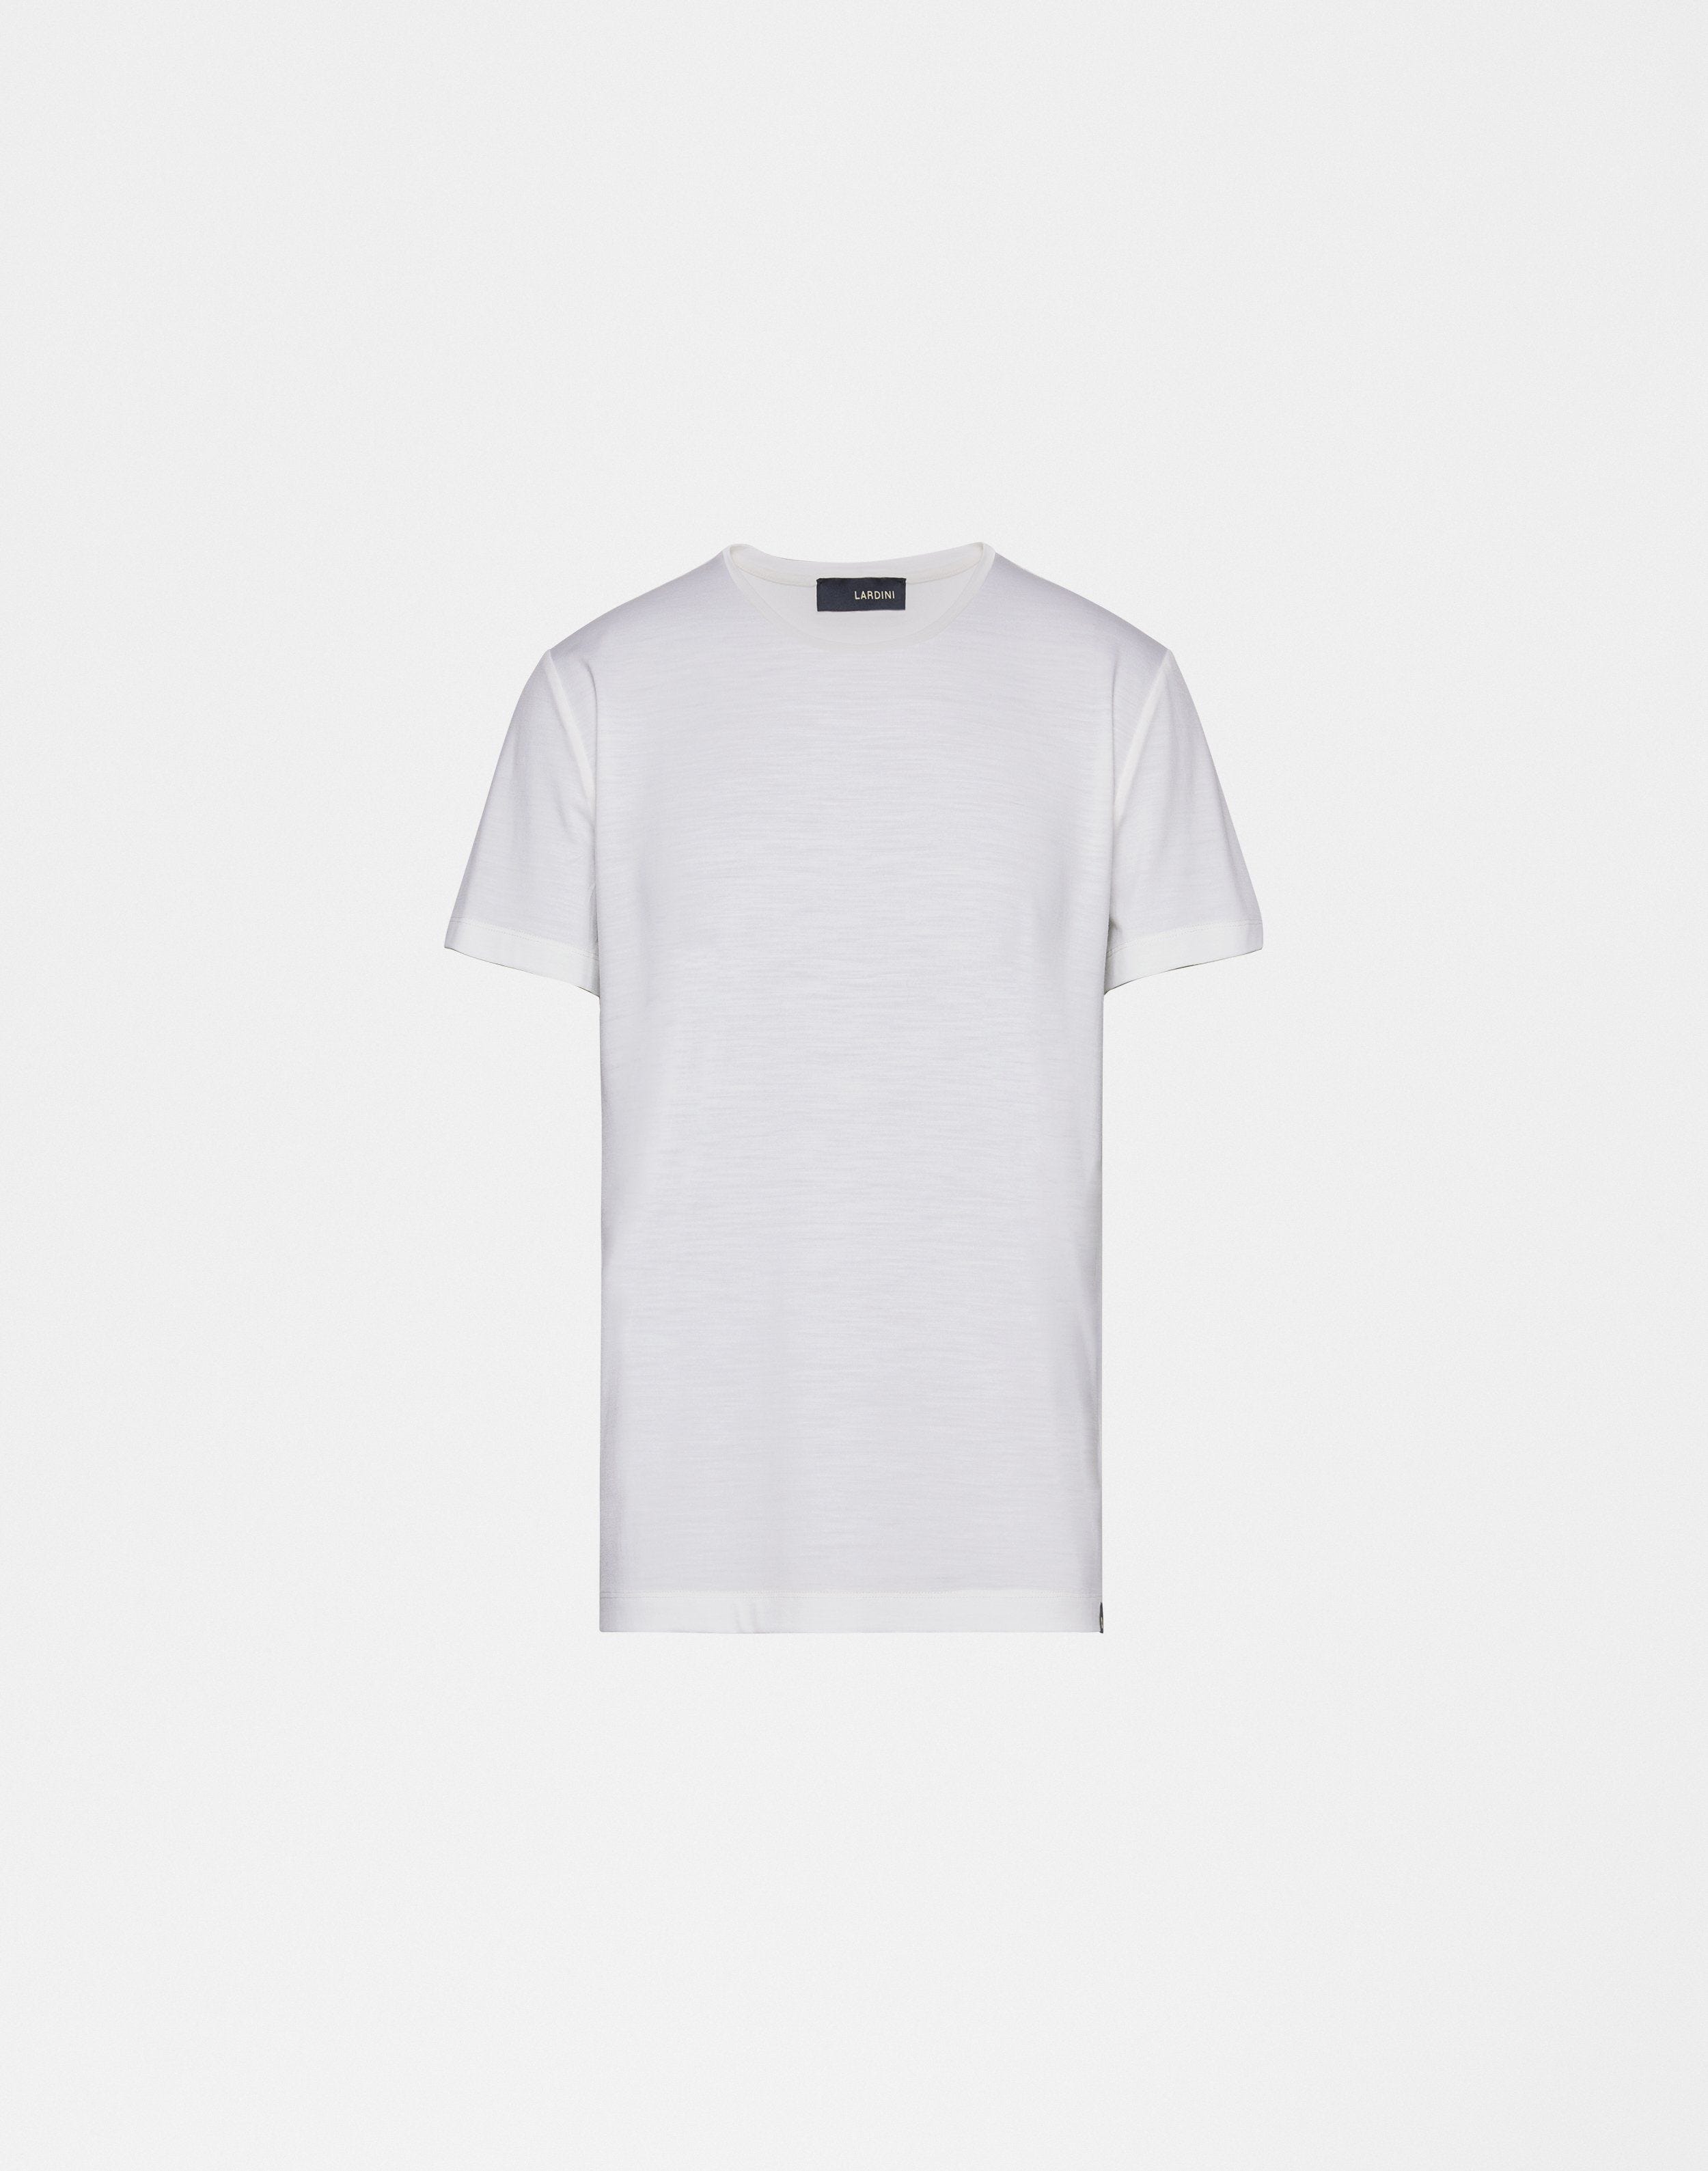 Louis Vuitton Graphic Short Sleeved Crew Neck White T Shirt